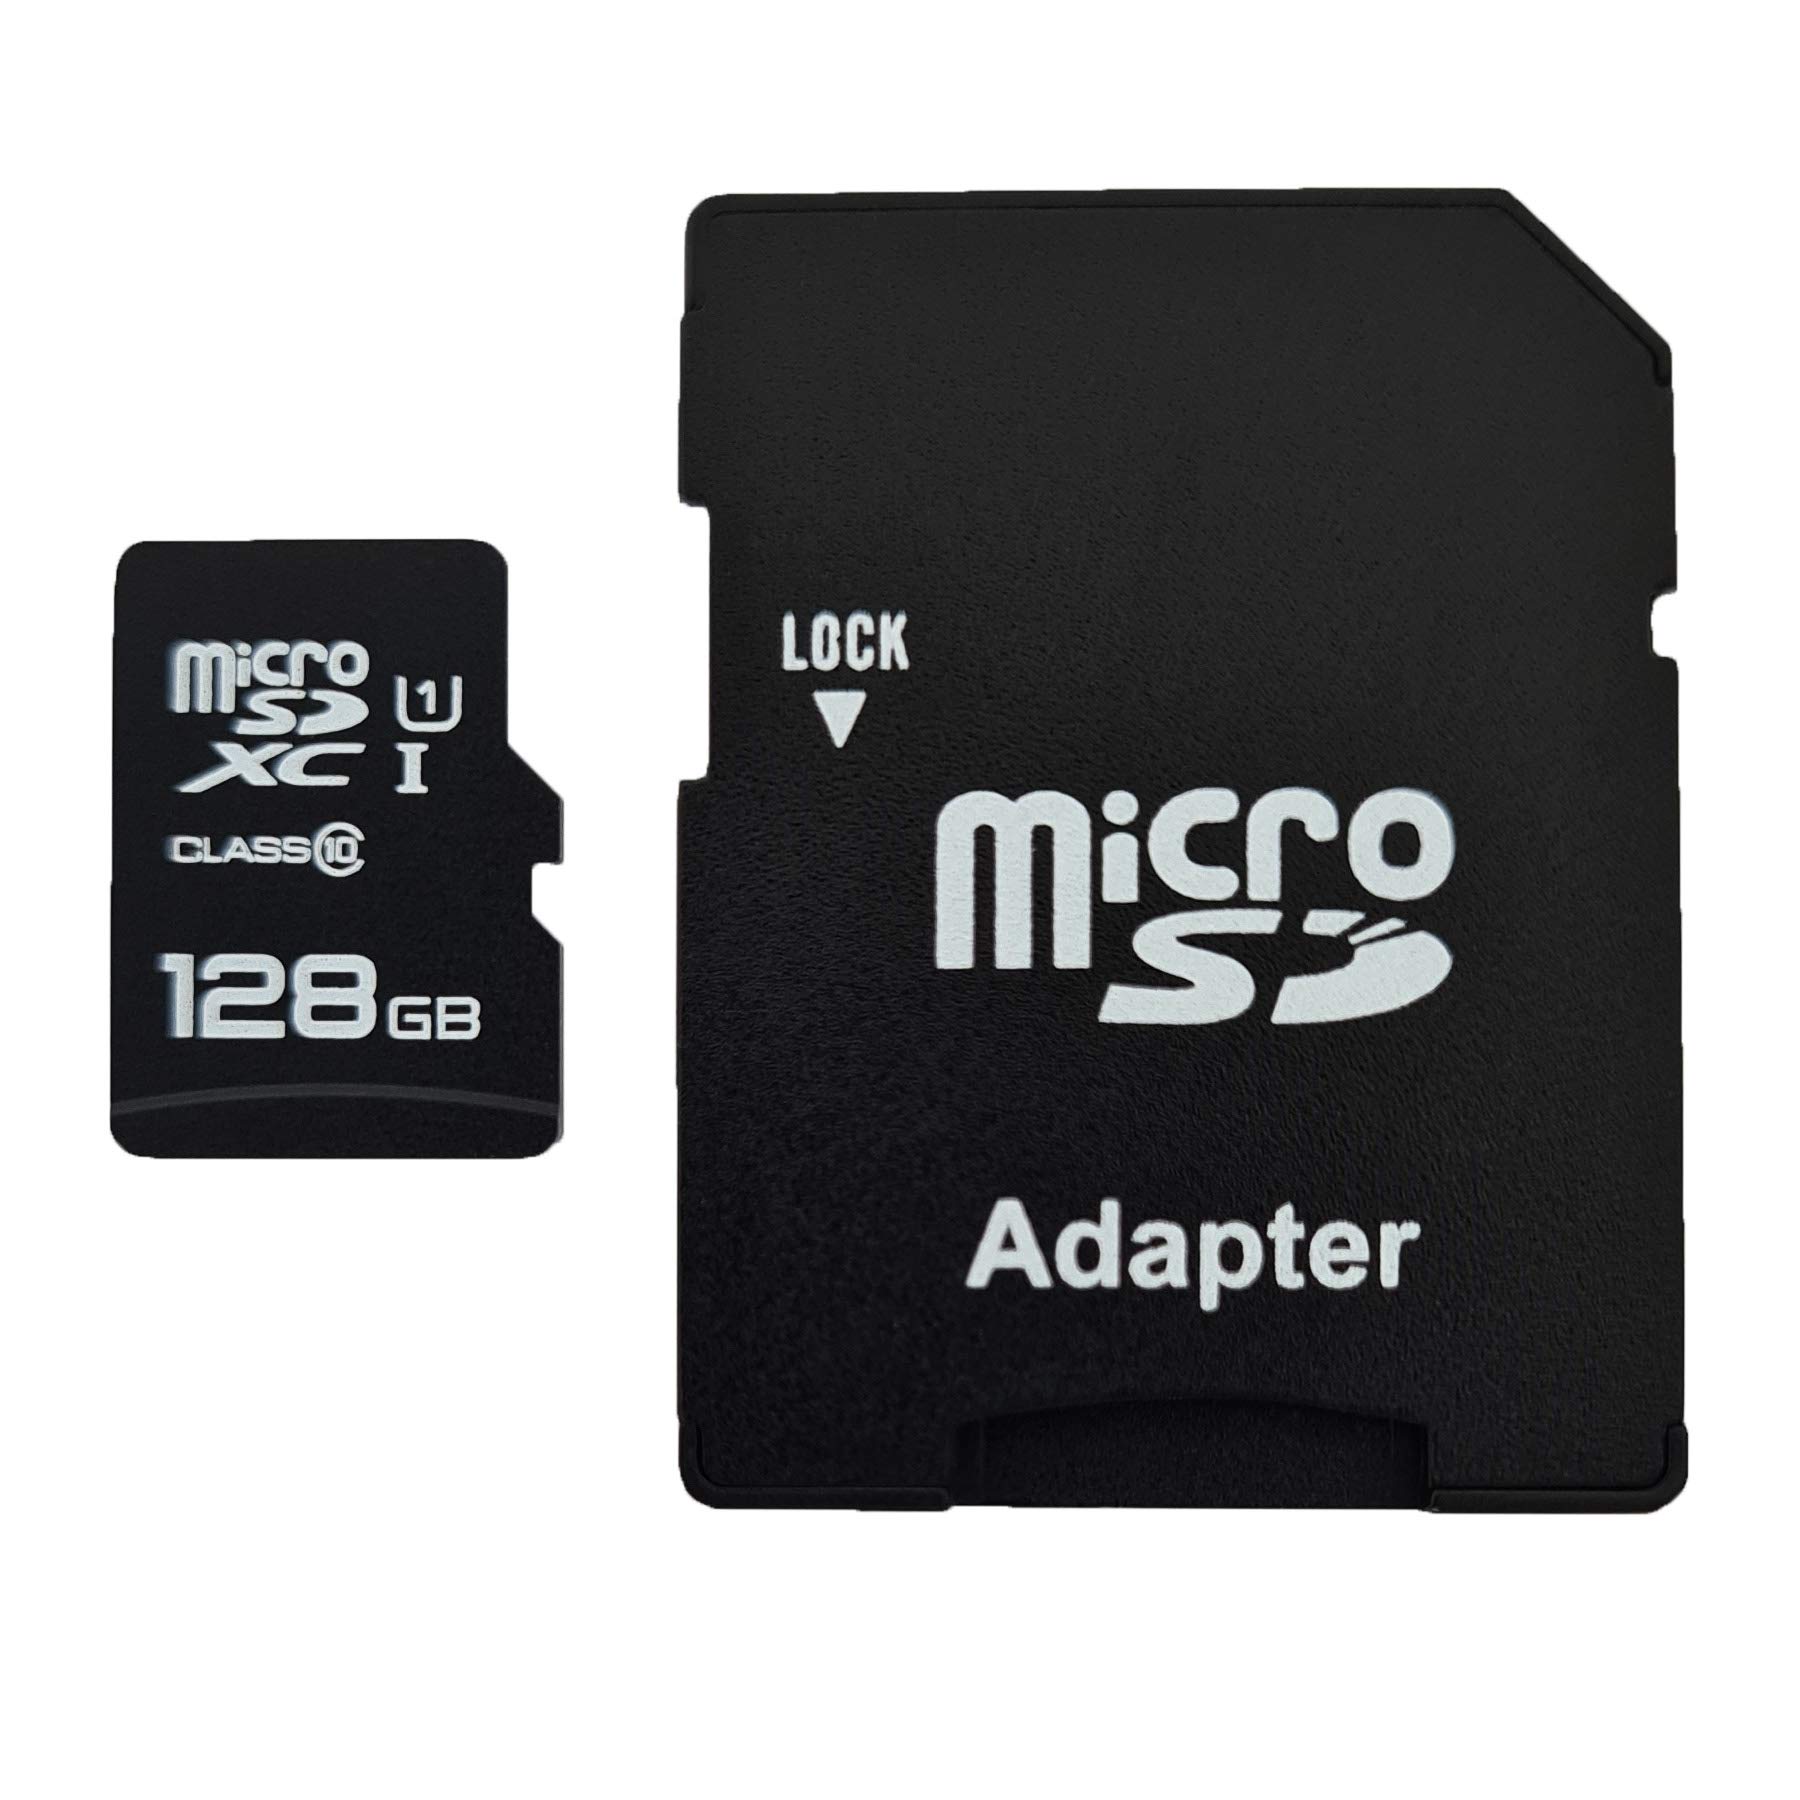 dekoelektropunktde 128GB MicroSDXC Speicherkarte mit Adapter Class 10 kompatibel für Olympus OM-D E-M10 Mark III